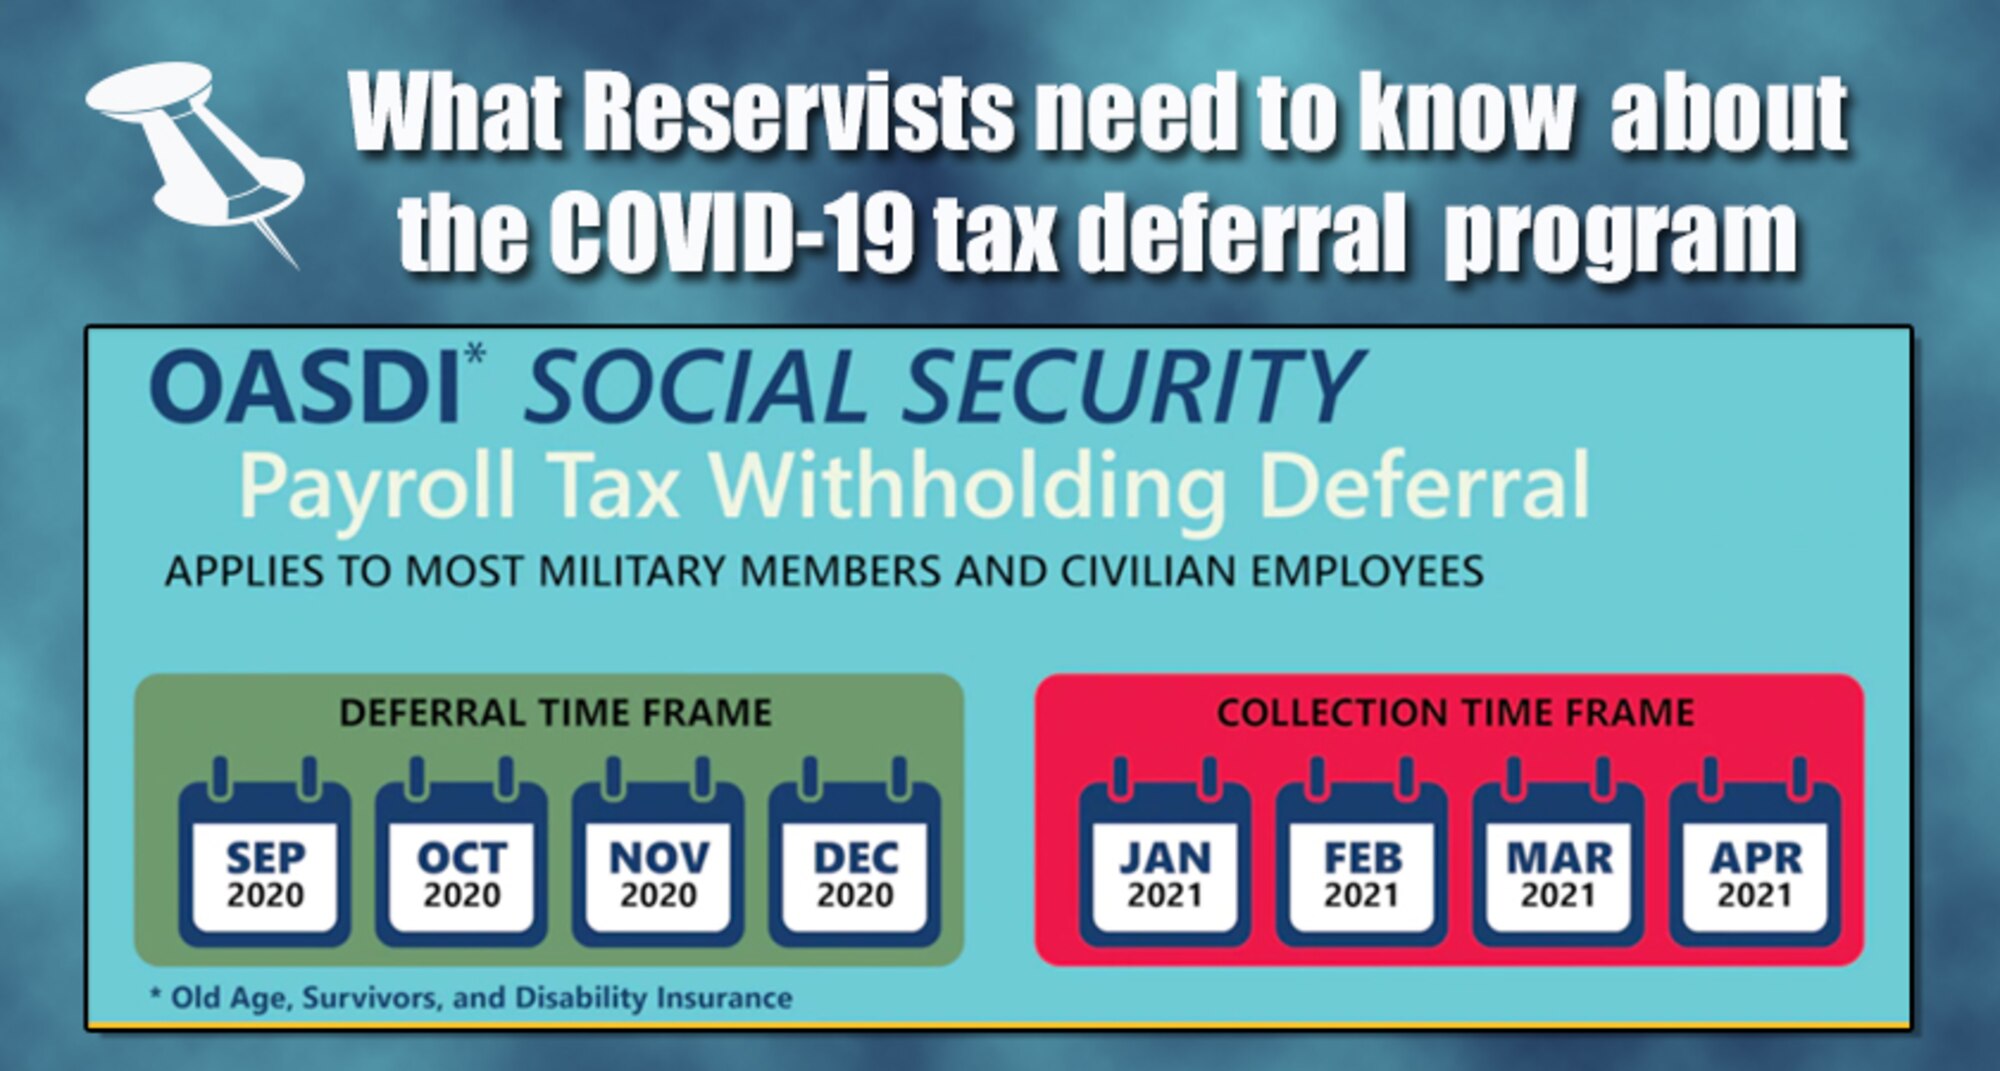 DFAS addresses Guard, Reserve specific Tax deferral details